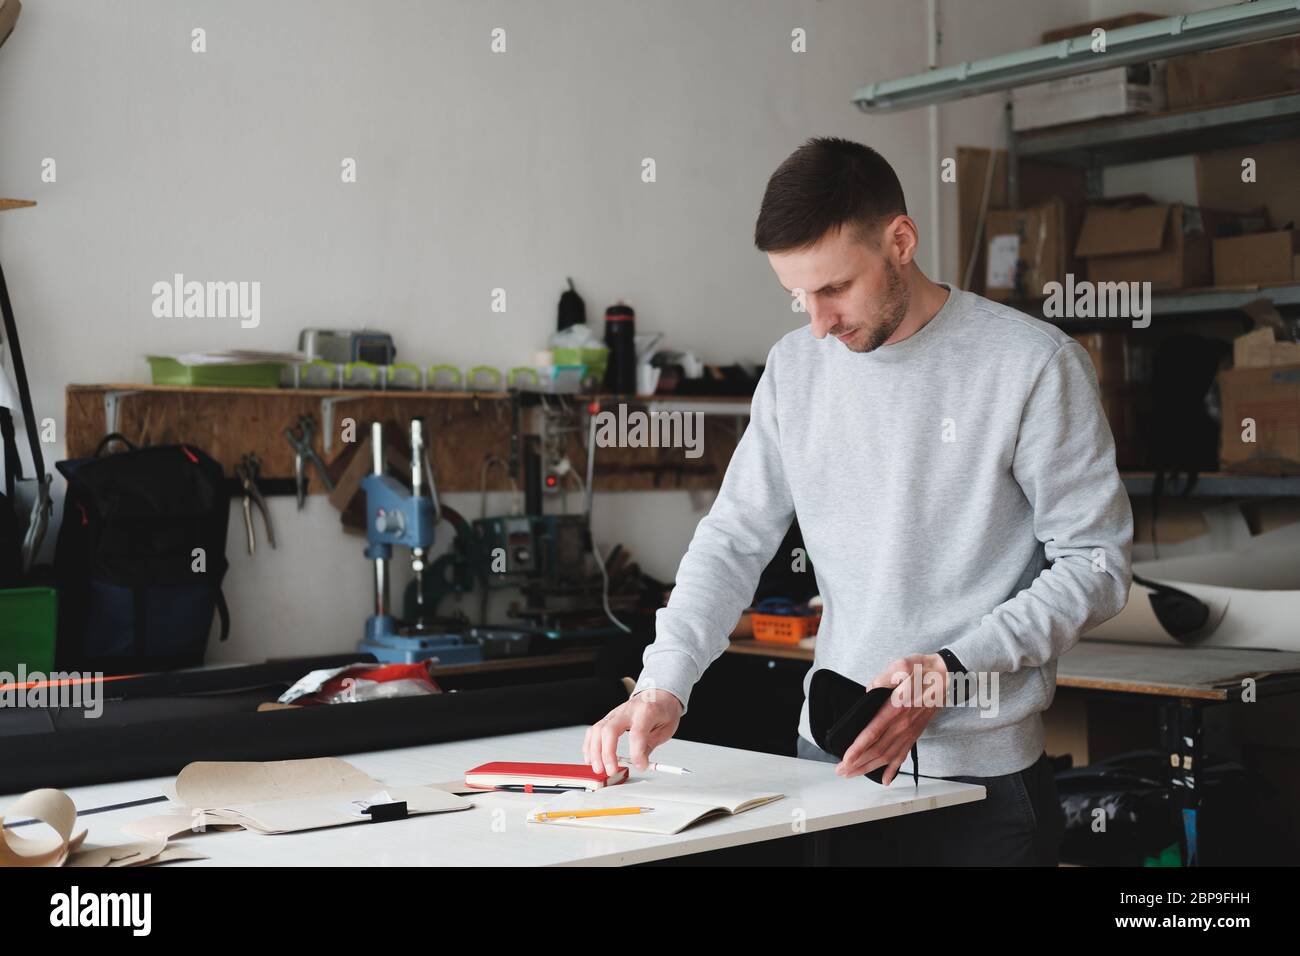 Retrato de un diseñador de ropa o ingeniero en un taller genérico. Pequeña empresa, empresa local, concepto de desarrollo de moda Foto de stock